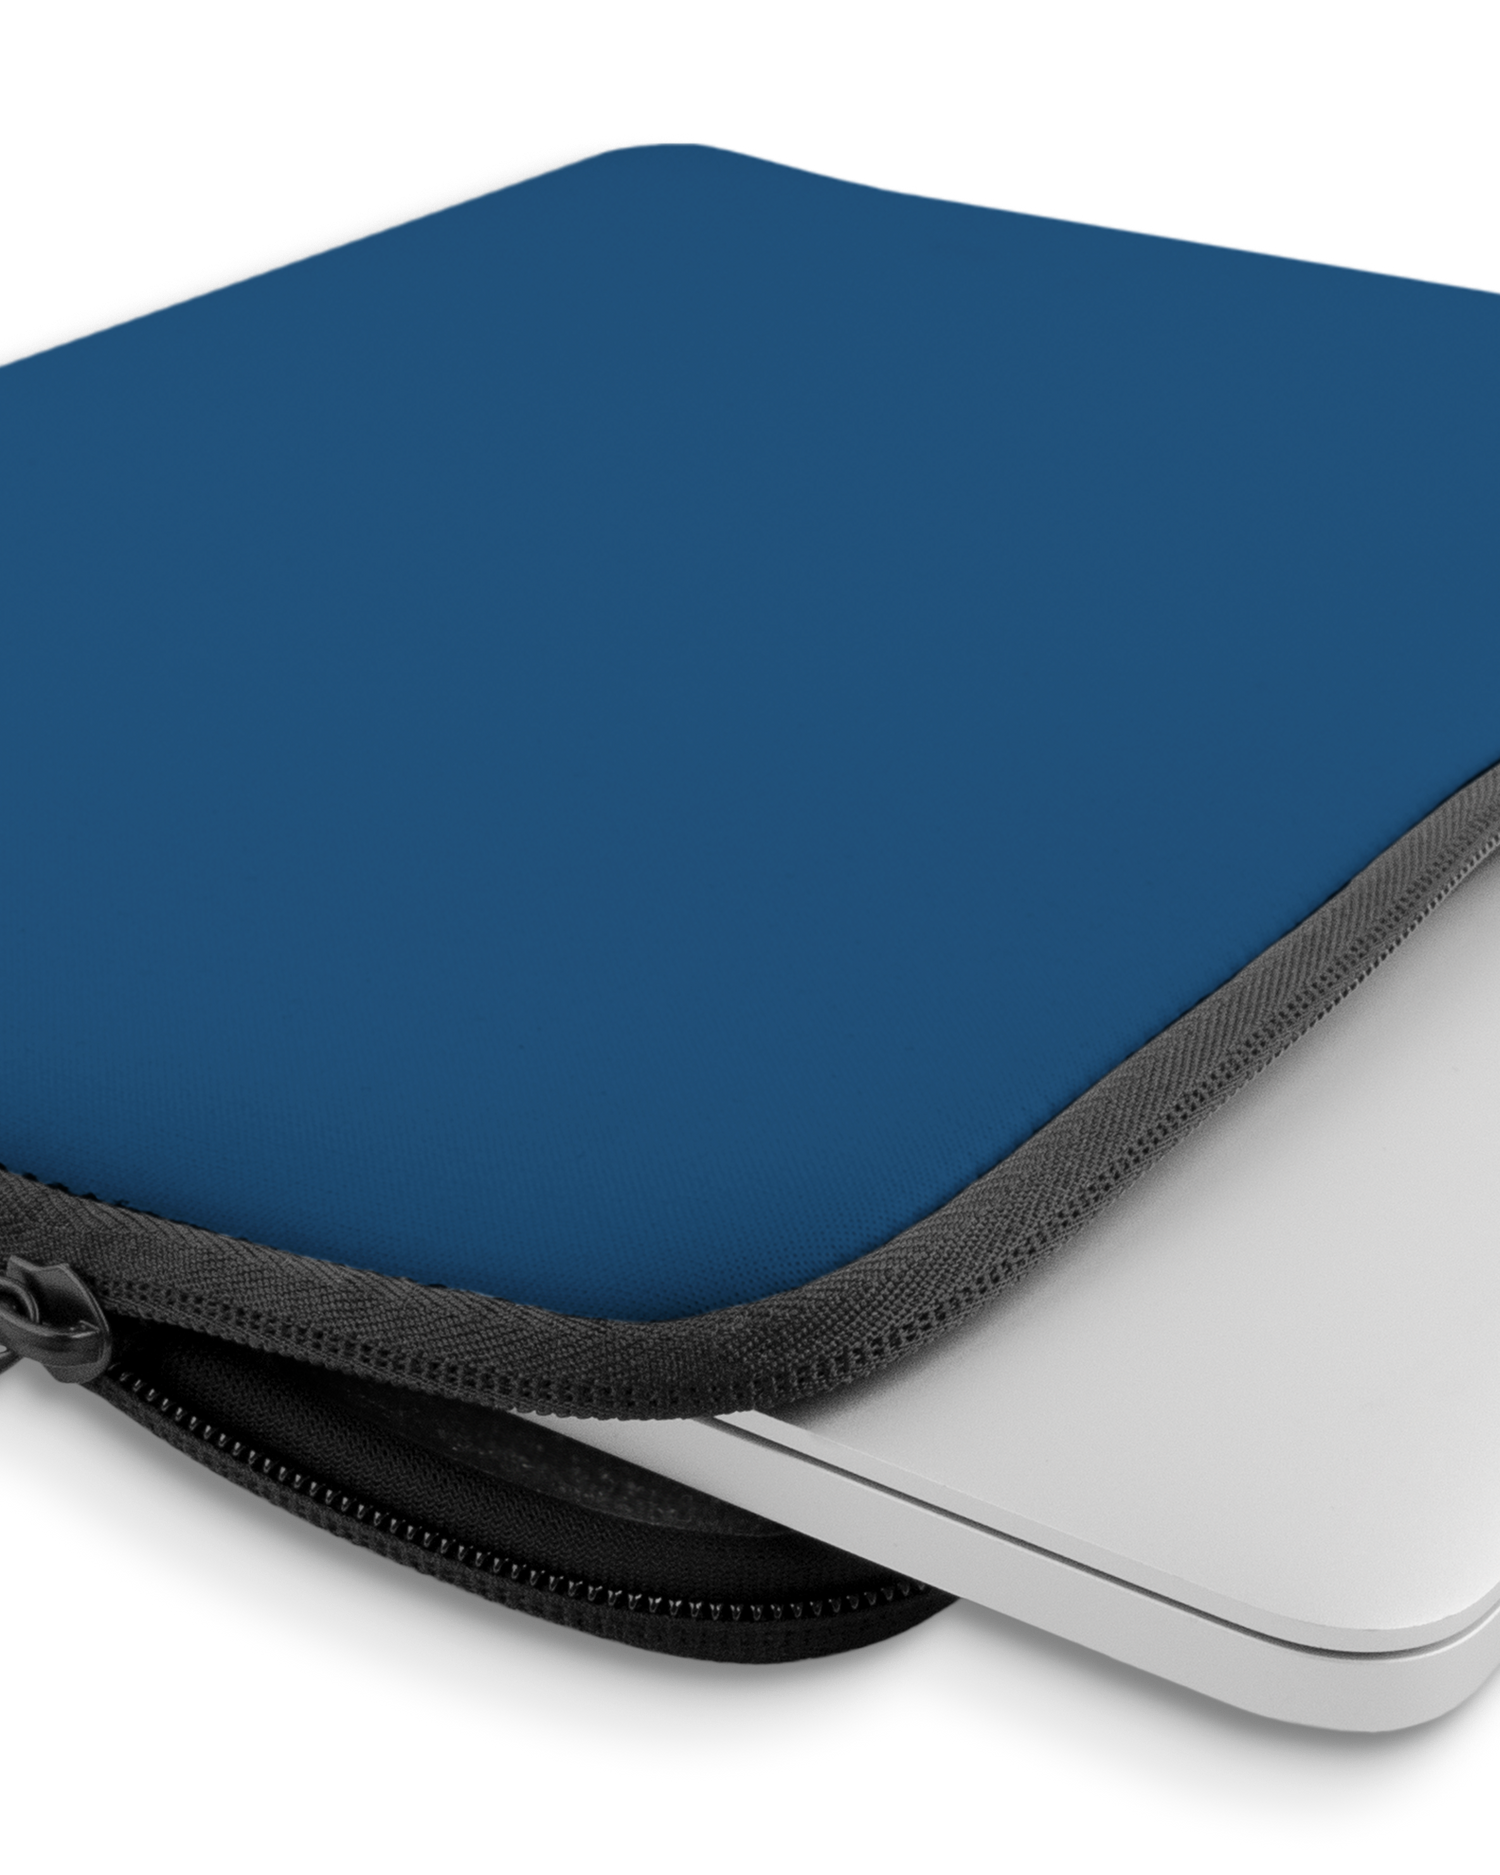 CLASSIC BLUE Laptophülle 13-14 Zoll mit Gerät im Inneren